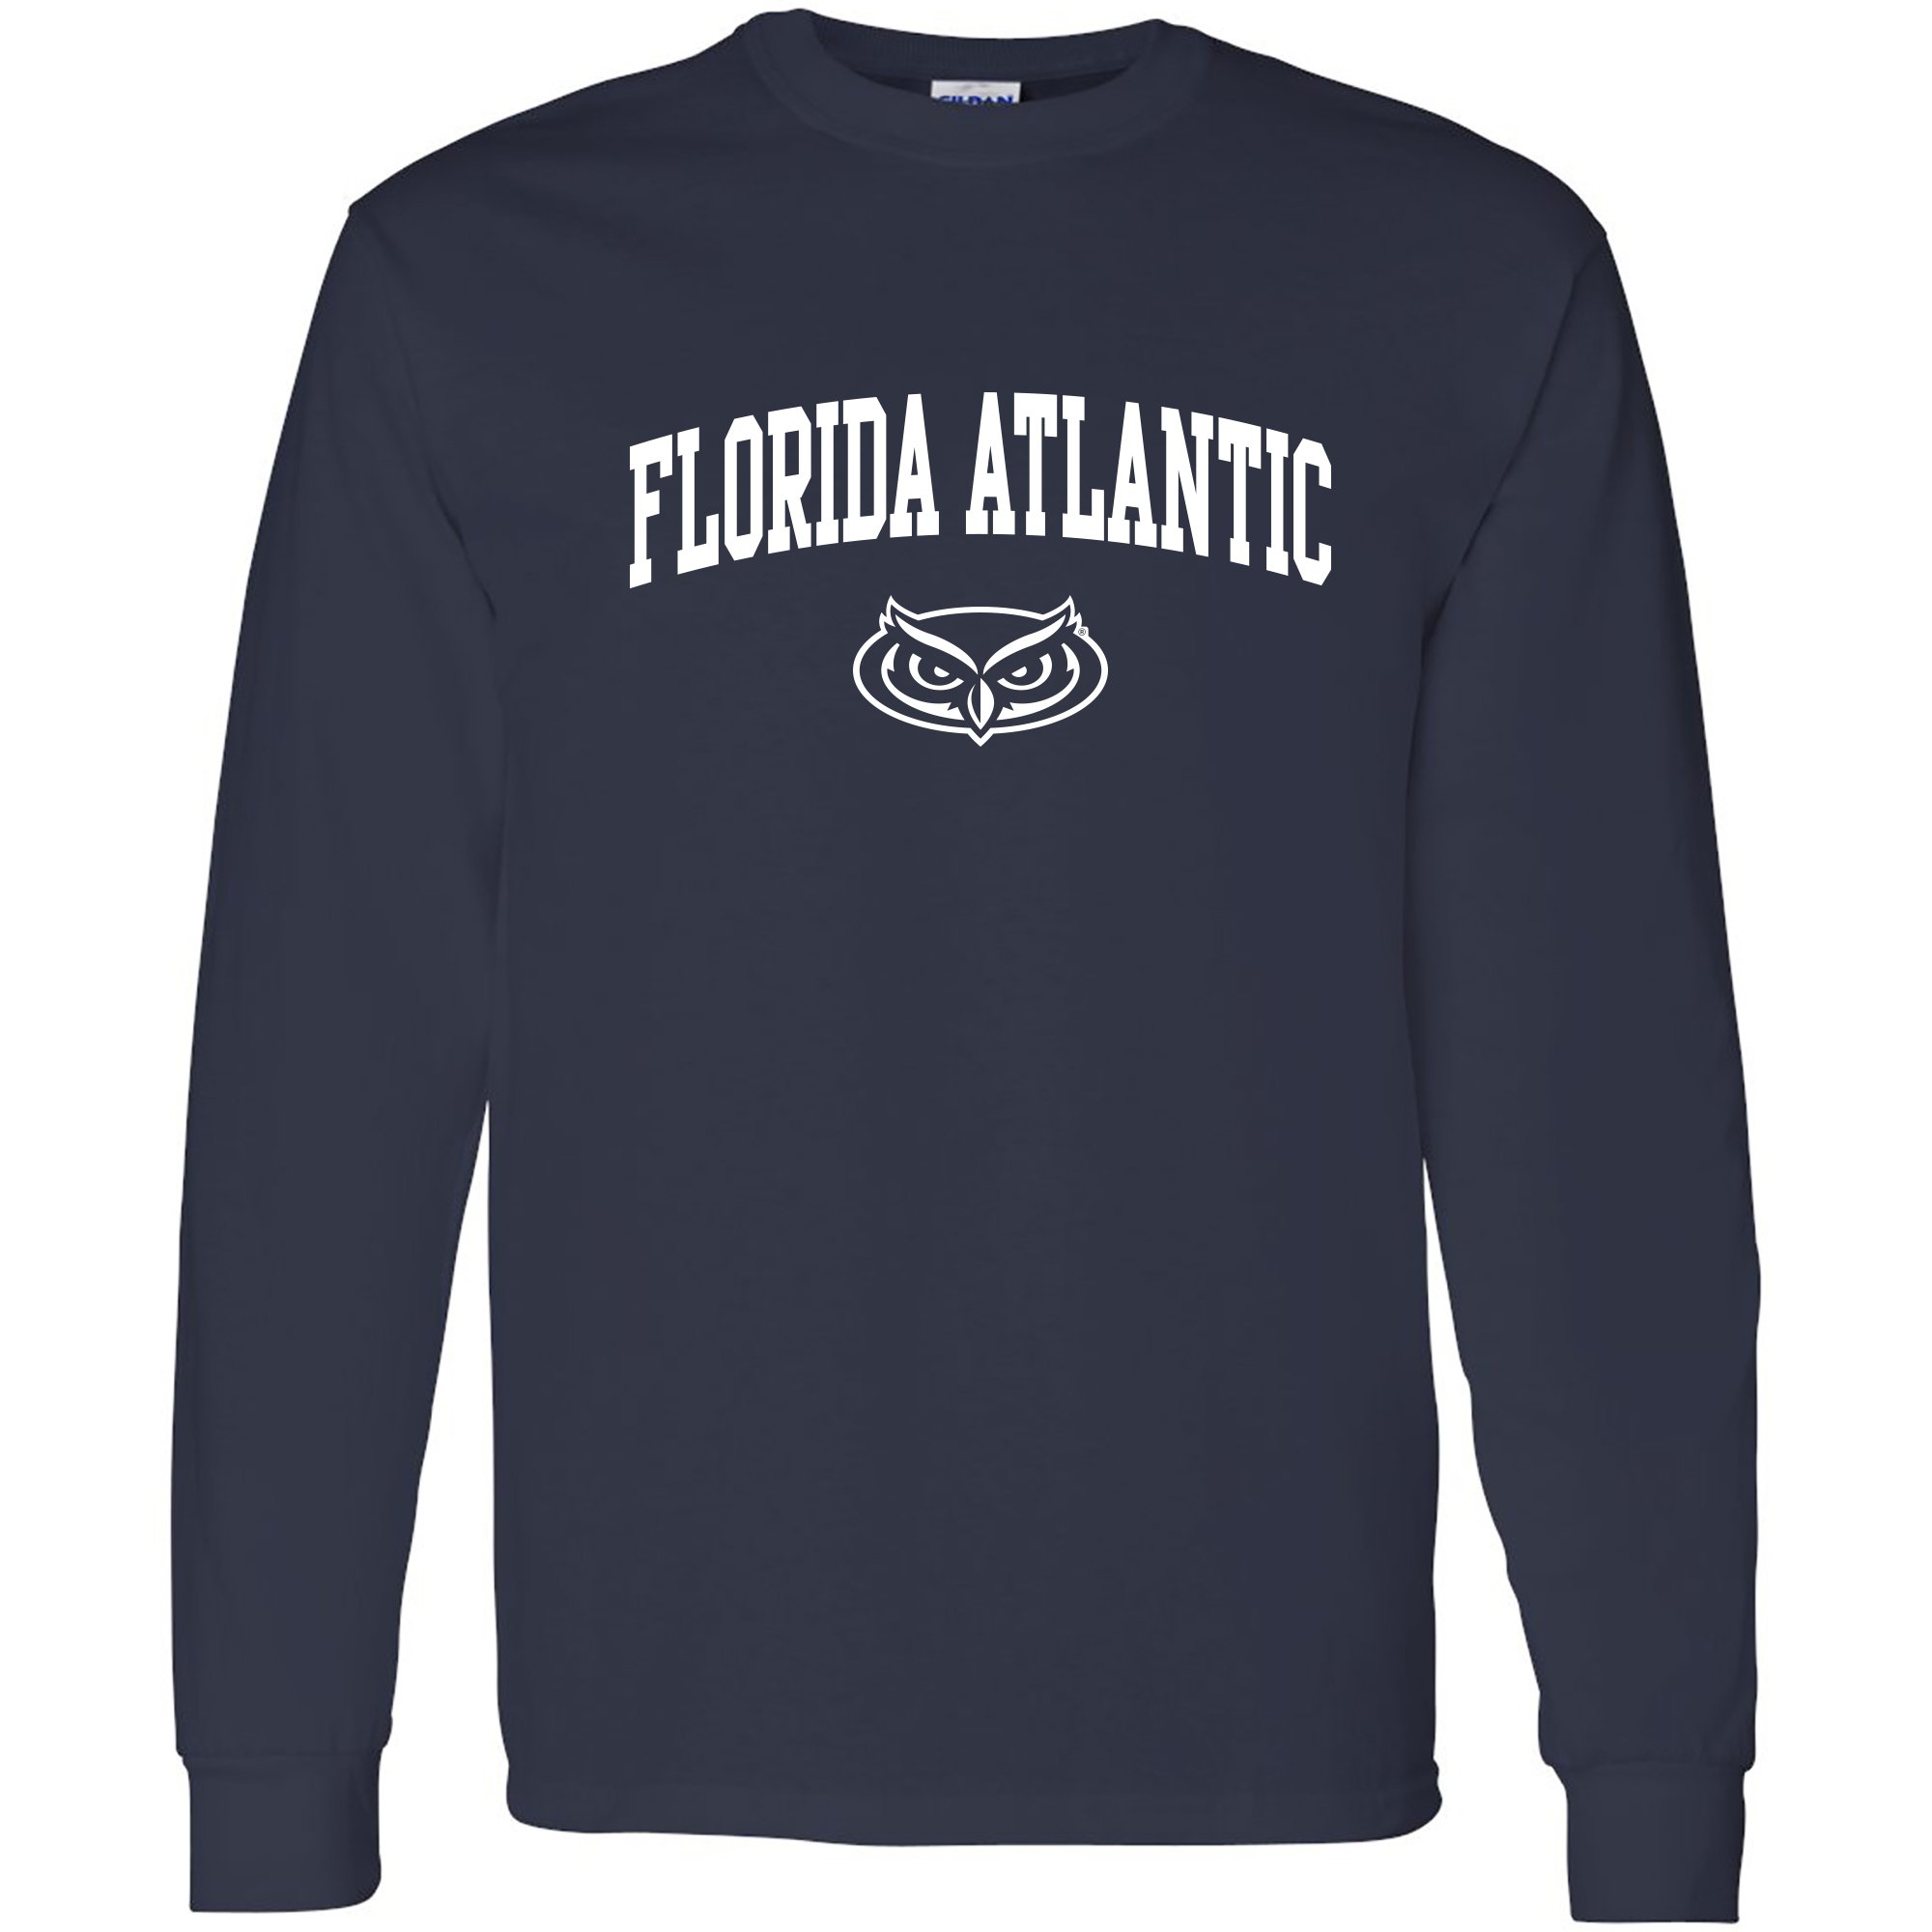 UGP Campus Apparel AL03 - FAU Florida Atlantic Owls Arch Logo Long Sleeve - X-Large - Navy